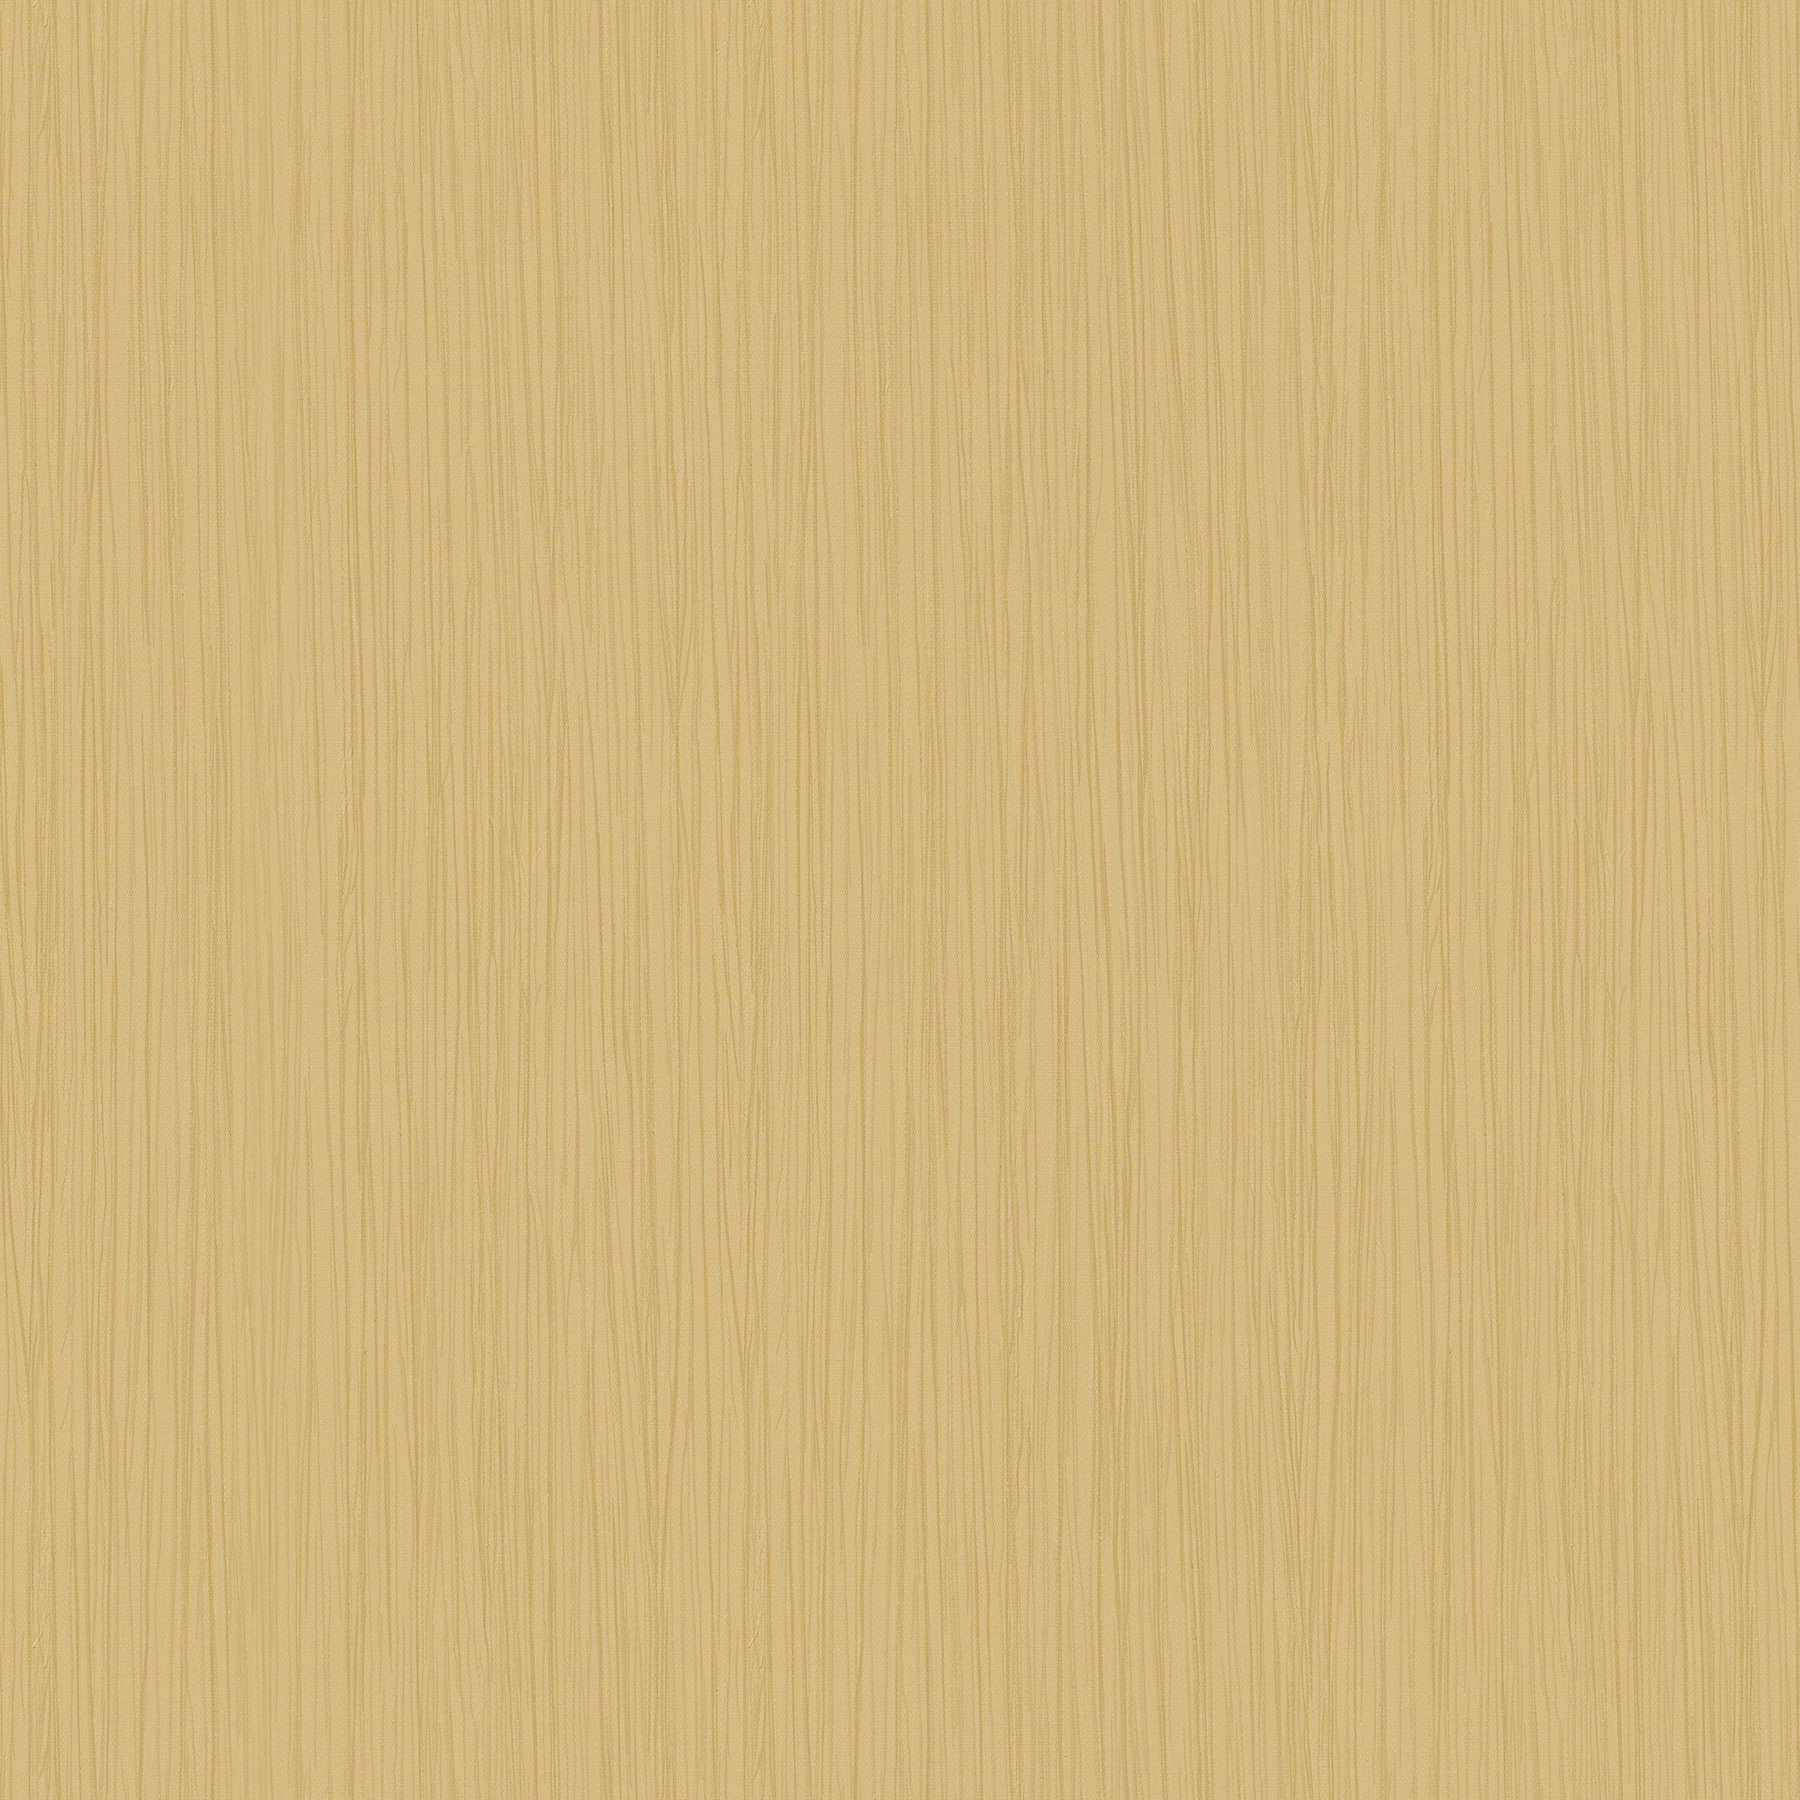 Premium non-woven wallpaper plain with line structure - brown, gold
